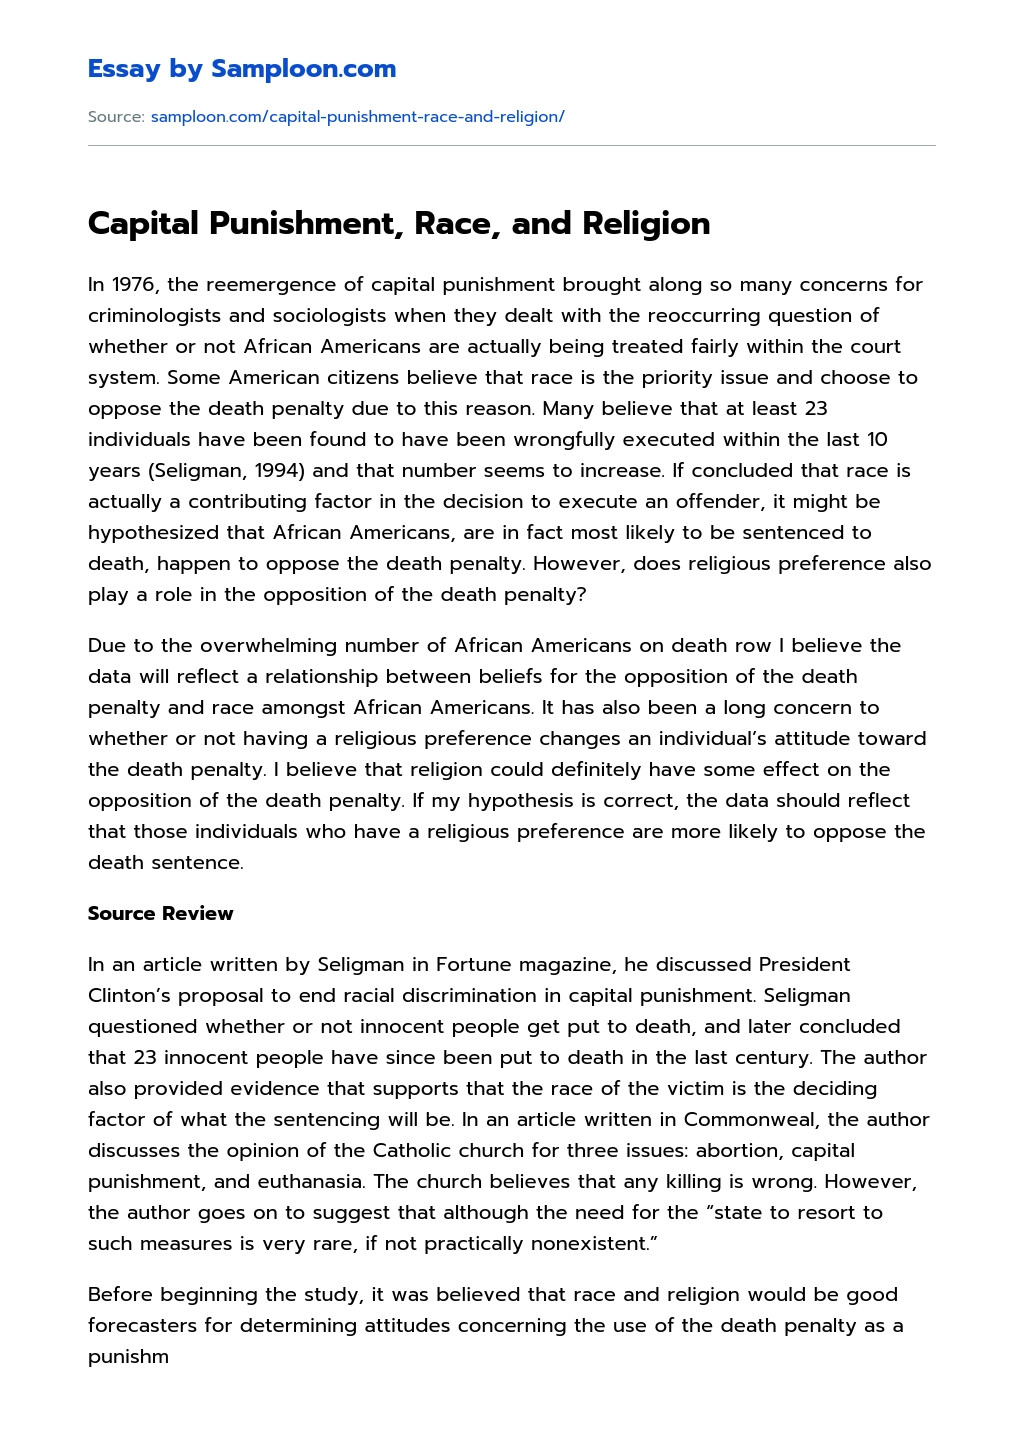 Capital Punishment, Race, and Religion essay